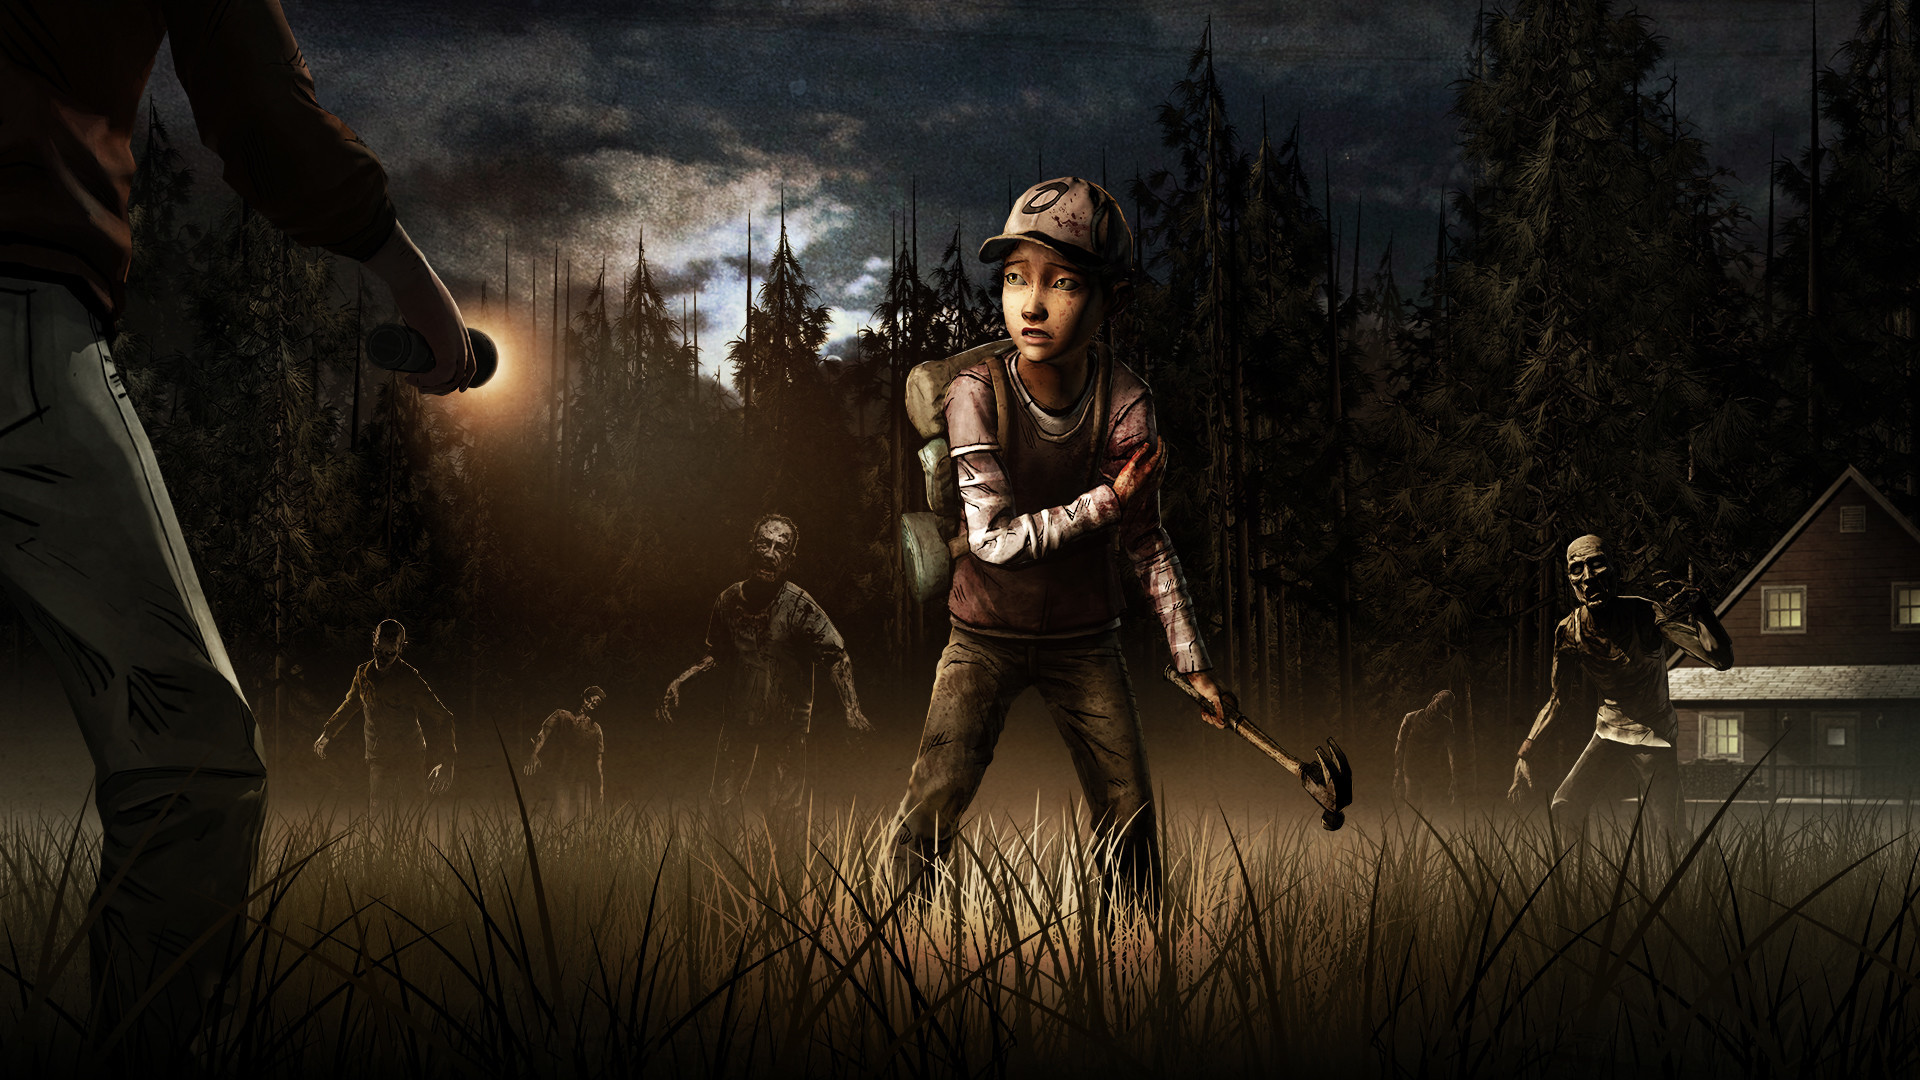 1920x1080  25 The Walking Dead: Season 2 HD Wallpapers | Backgrounds -  Wallpaper Abyss